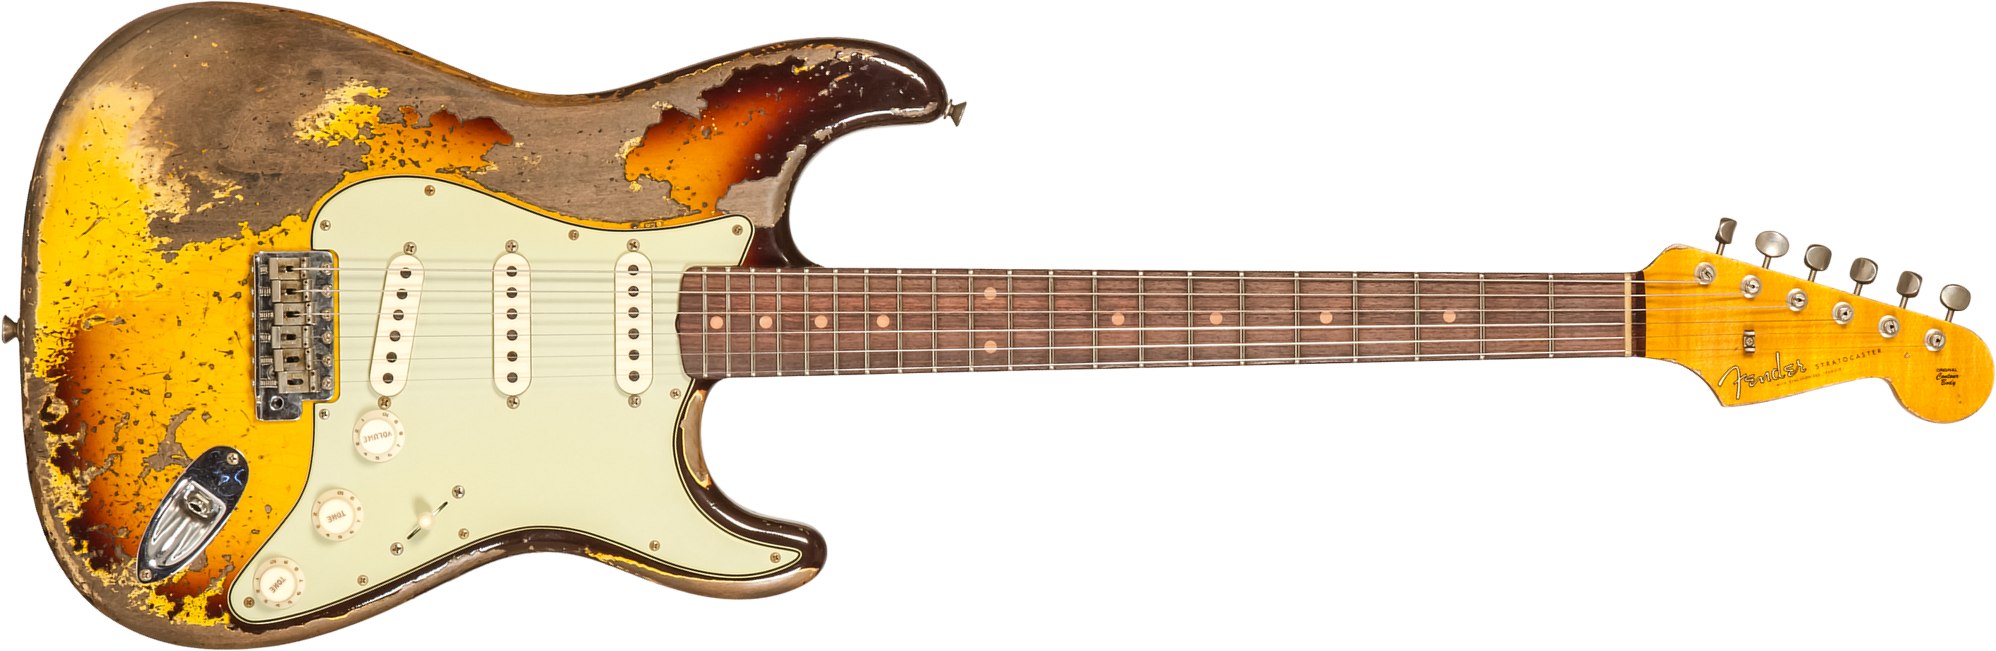 Fender Custom Shop Strat 1959 3s Trem Rw #cz569850 - Super Heavy Relic Aged Chocolate 3-color Sunburst - Elektrische gitaar in Str-vorm - Main picture